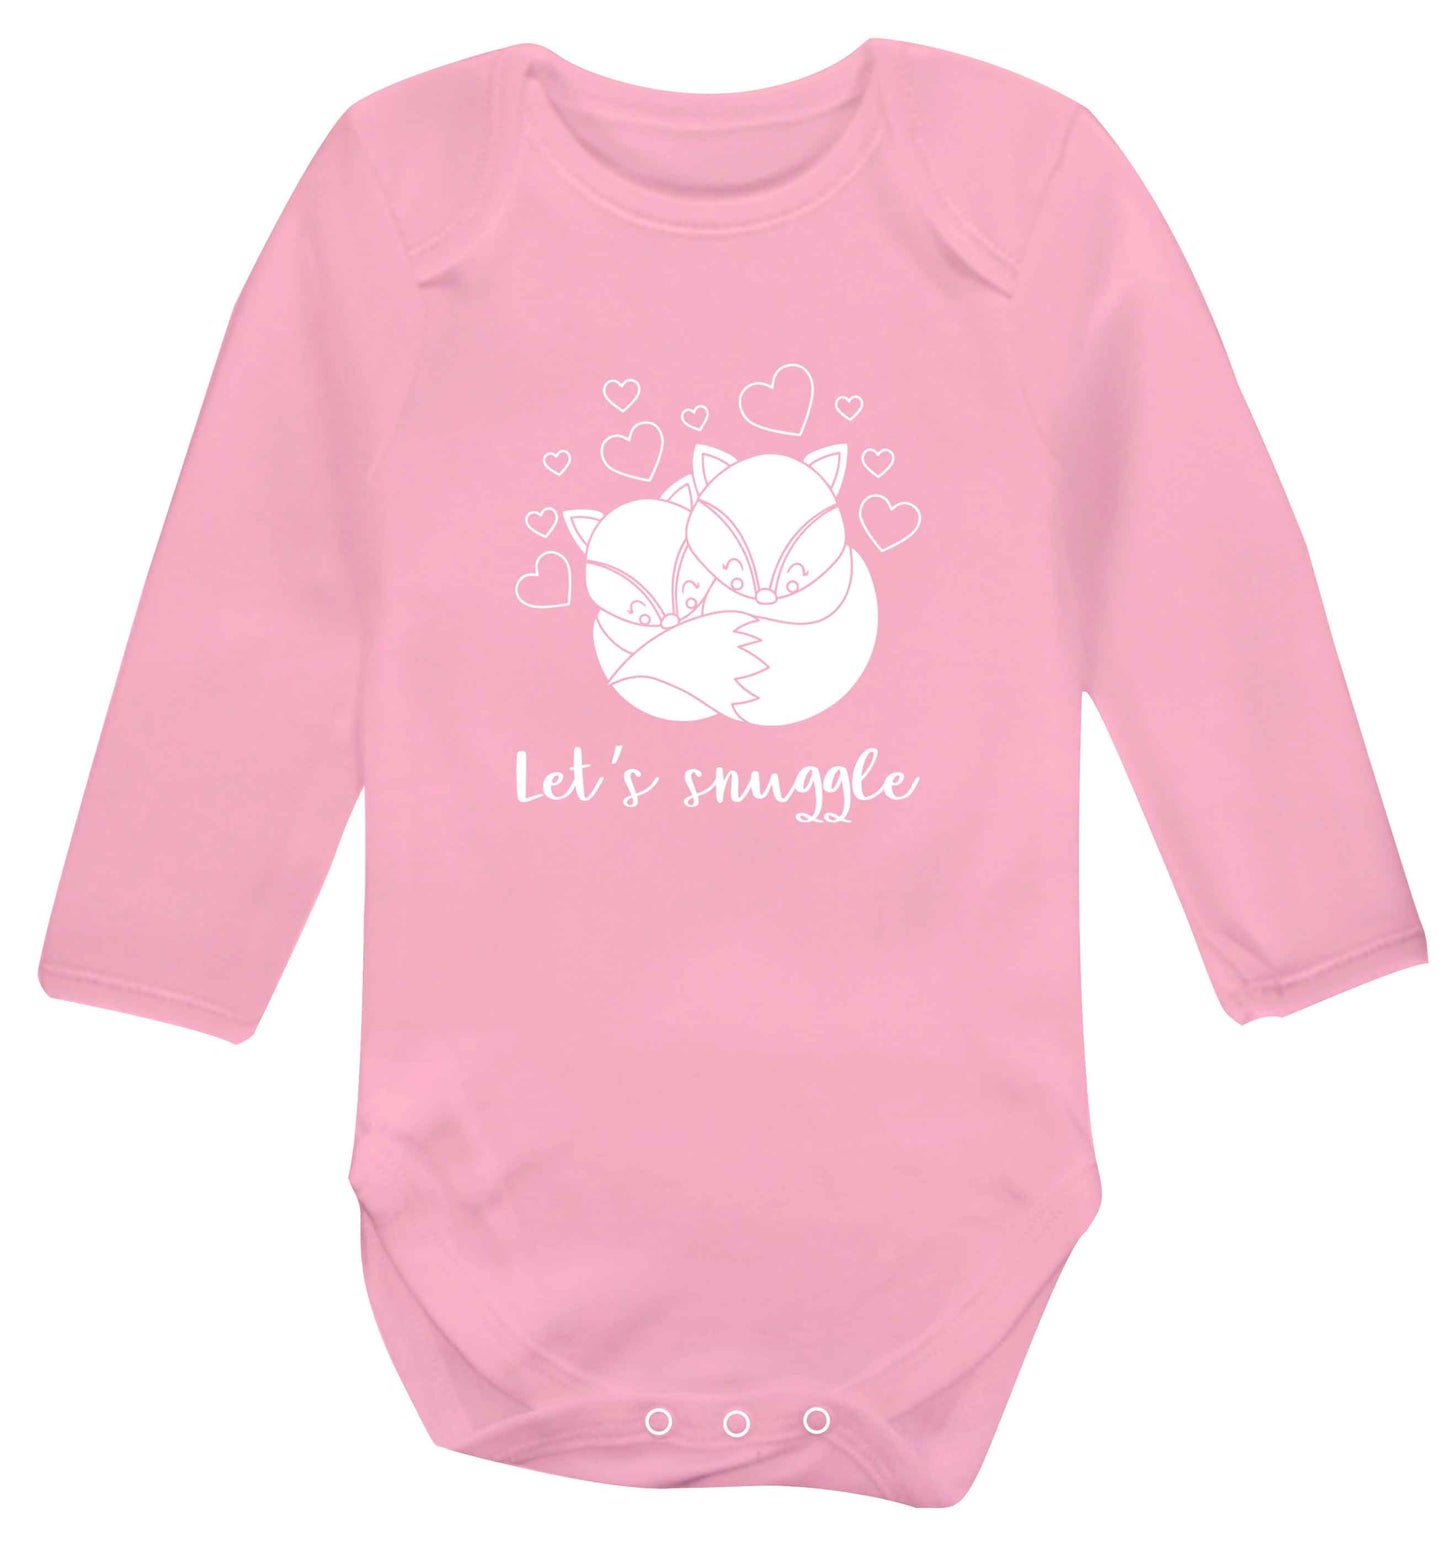 Let's snuggle baby vest long sleeved pale pink 6-12 months